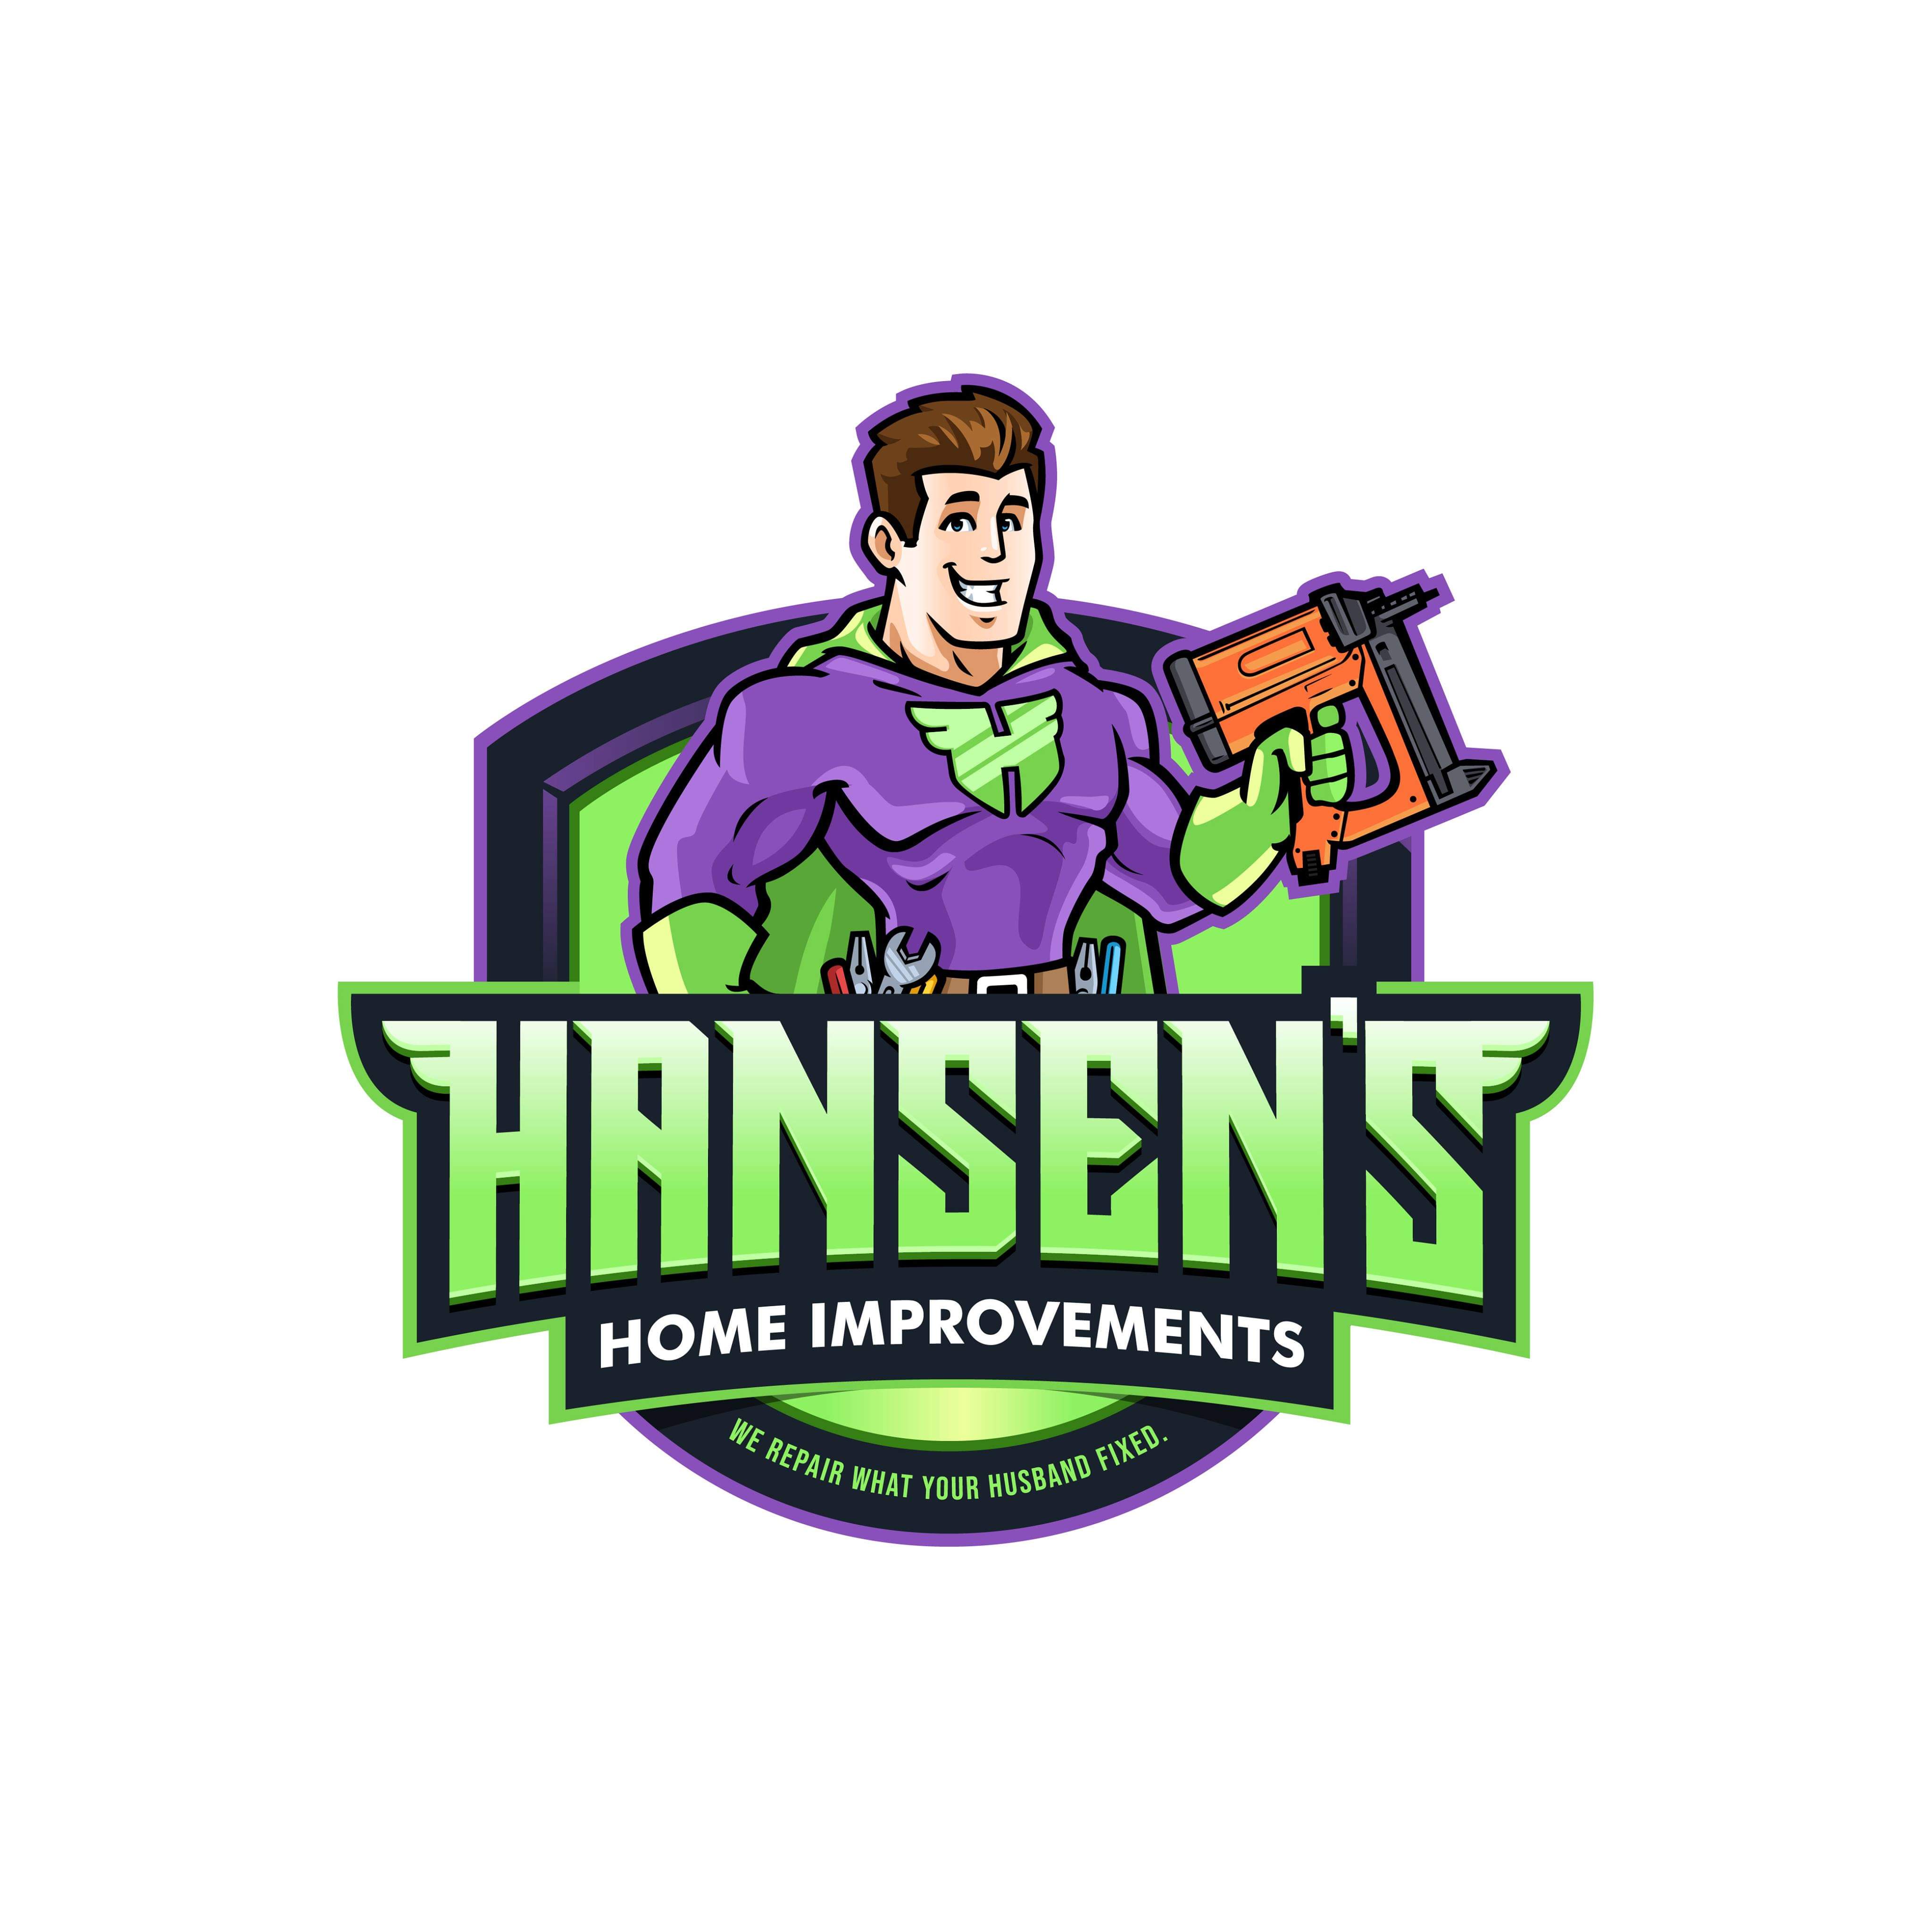 Hansen's Home Improvements